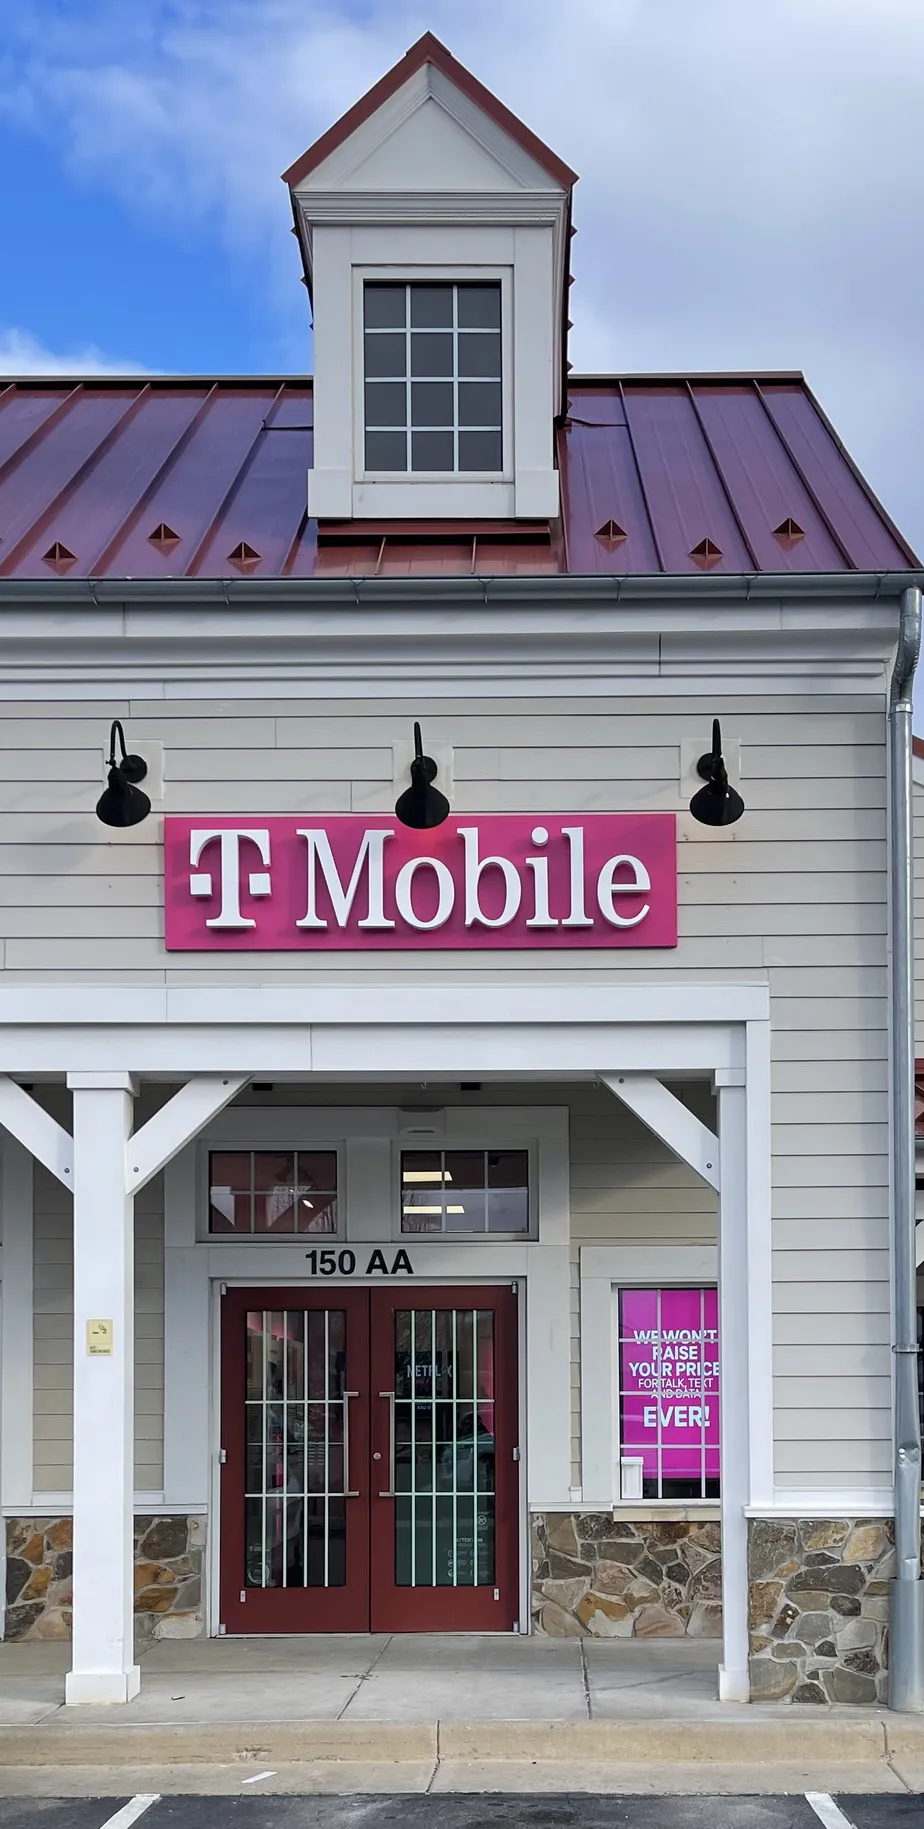 Foto del exterior de la tienda T-Mobile en Purcellville Gateway, Purcellville, VA